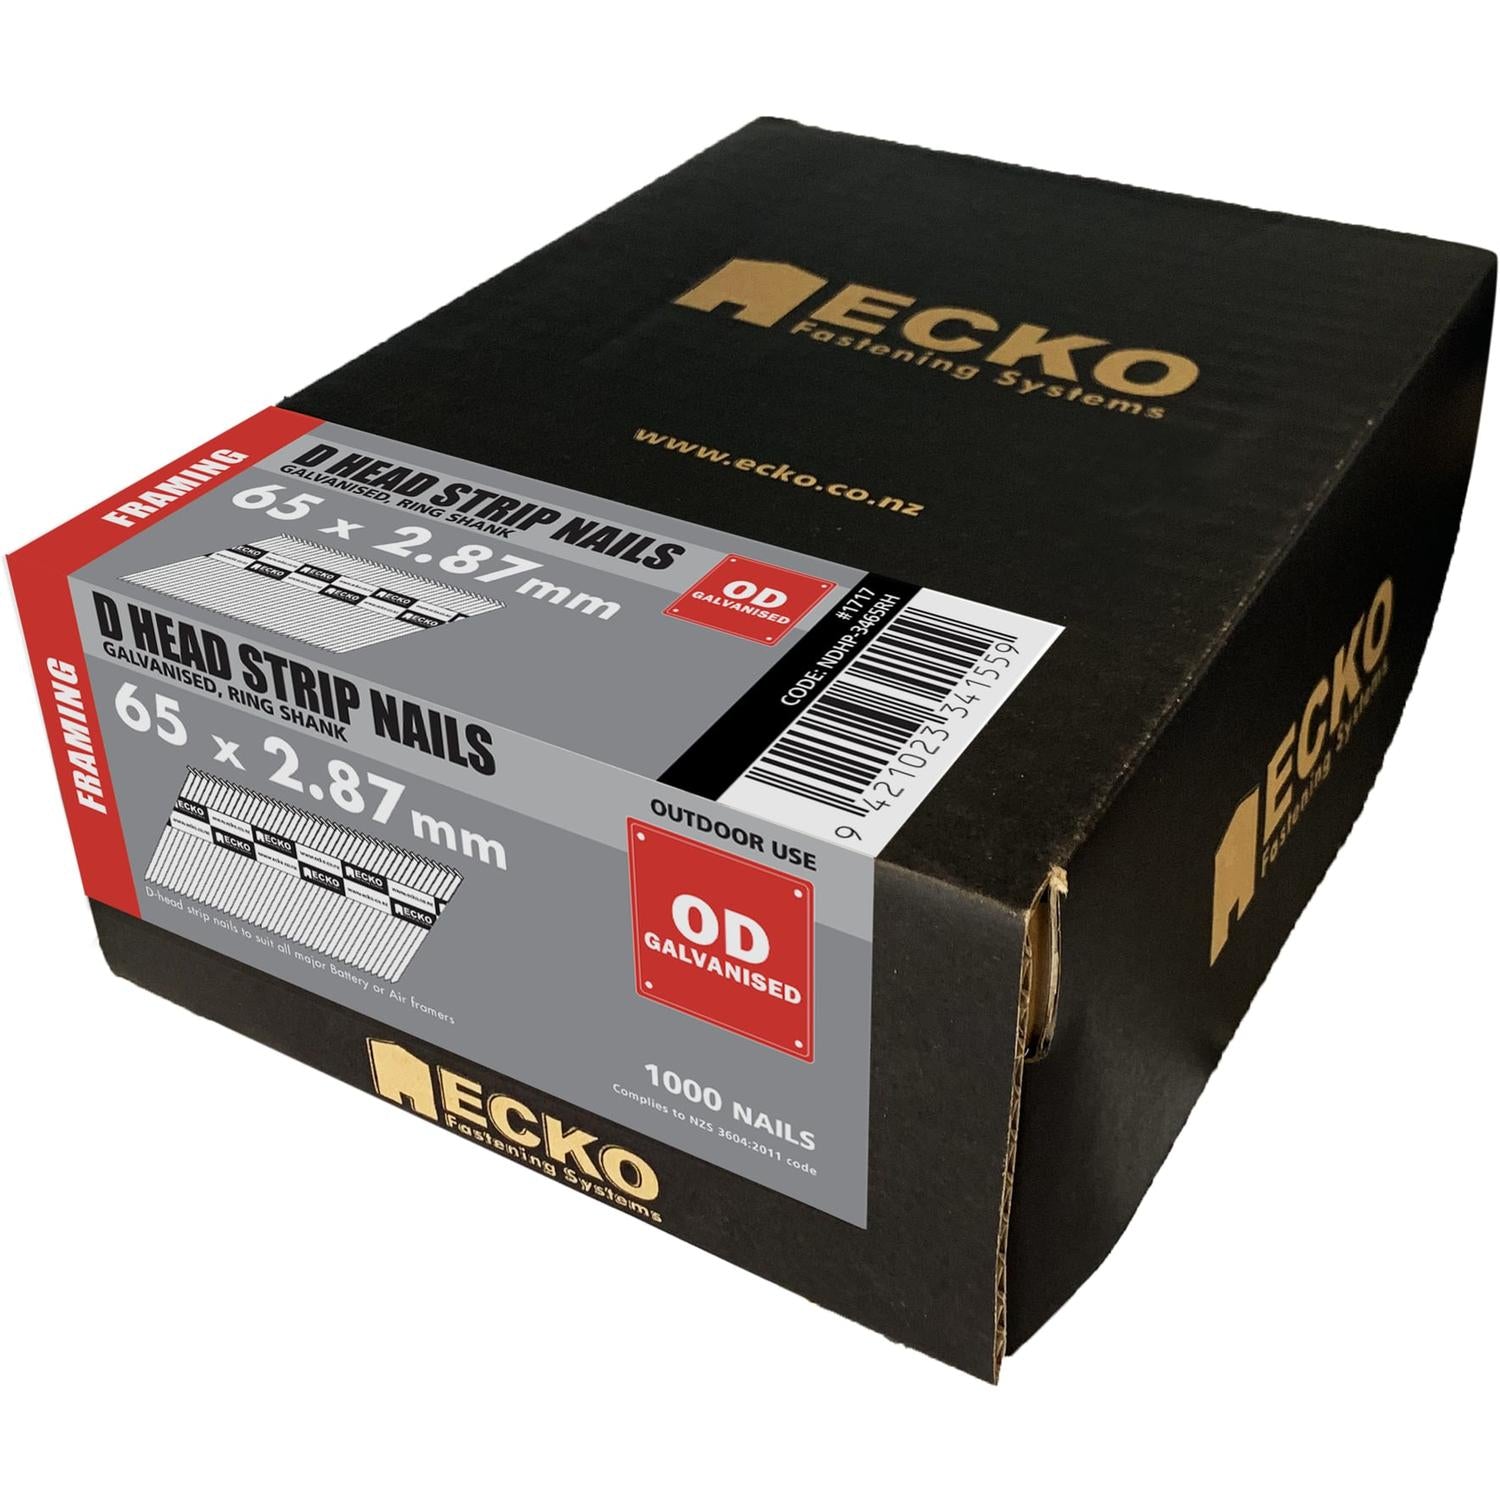 Ecko Framing Nails 65 X 2.87Mm Galvanised - Gasless Pack (1000 Box)